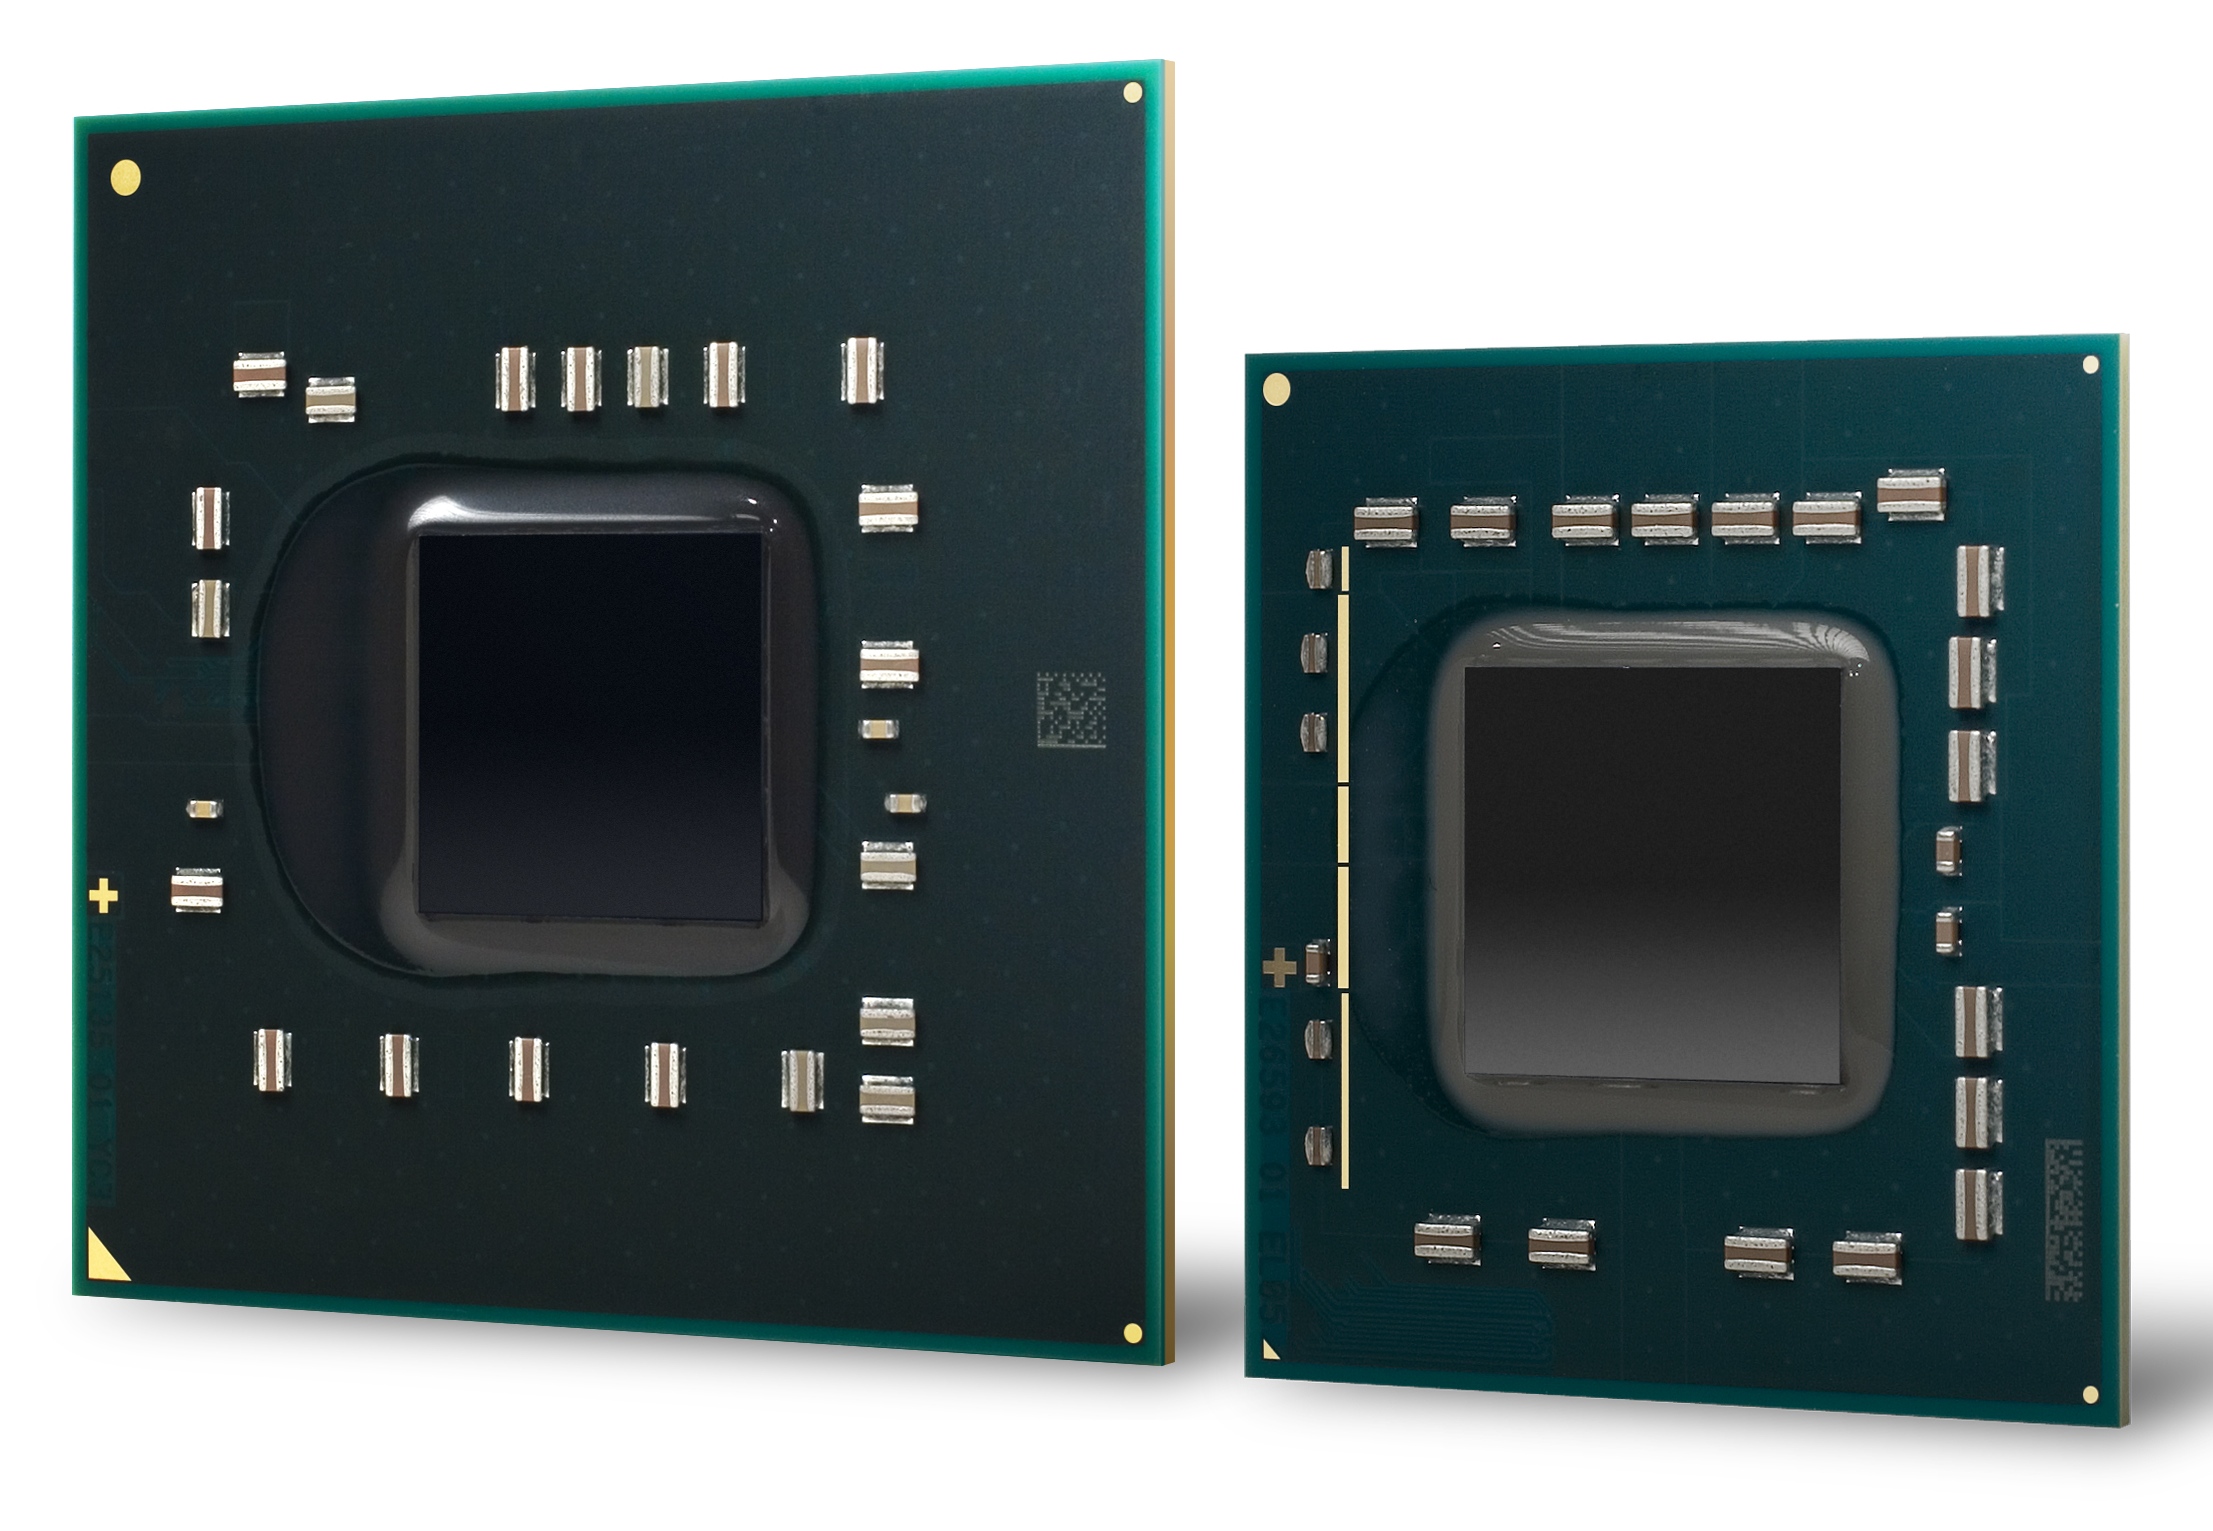 Intel gma 3100. Графический процессор Intel GMA 3150. Intel GMA x4500 видеокарта. Intel GMA 4500mhd видеокарта. Intel GMA 3150 видеокарта.